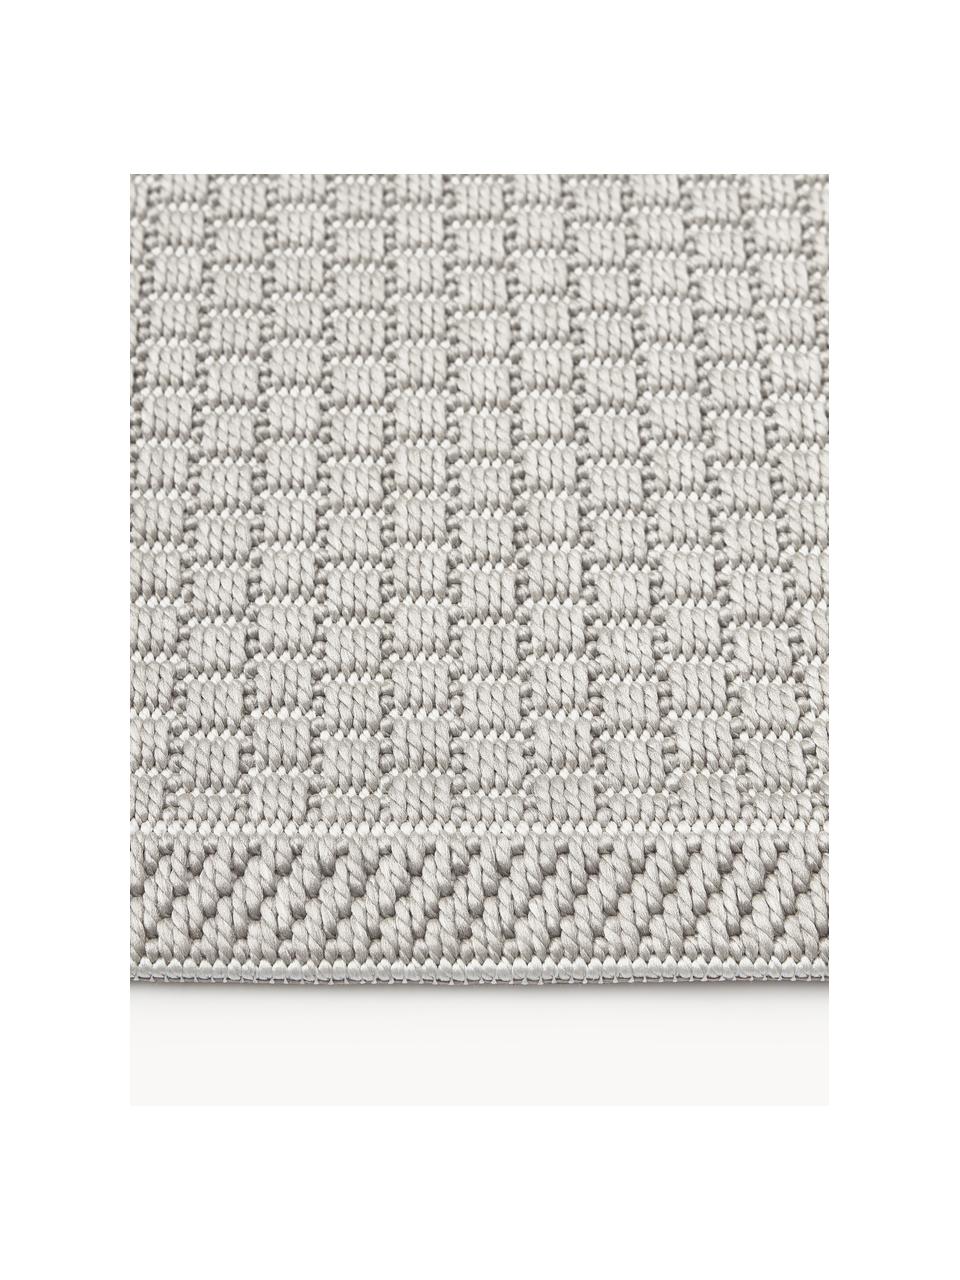 Kulatý interiérový a exteriérový koberec Toronto, 100 % polypropylen, Šedá, Ø 150 cm (velikost M)